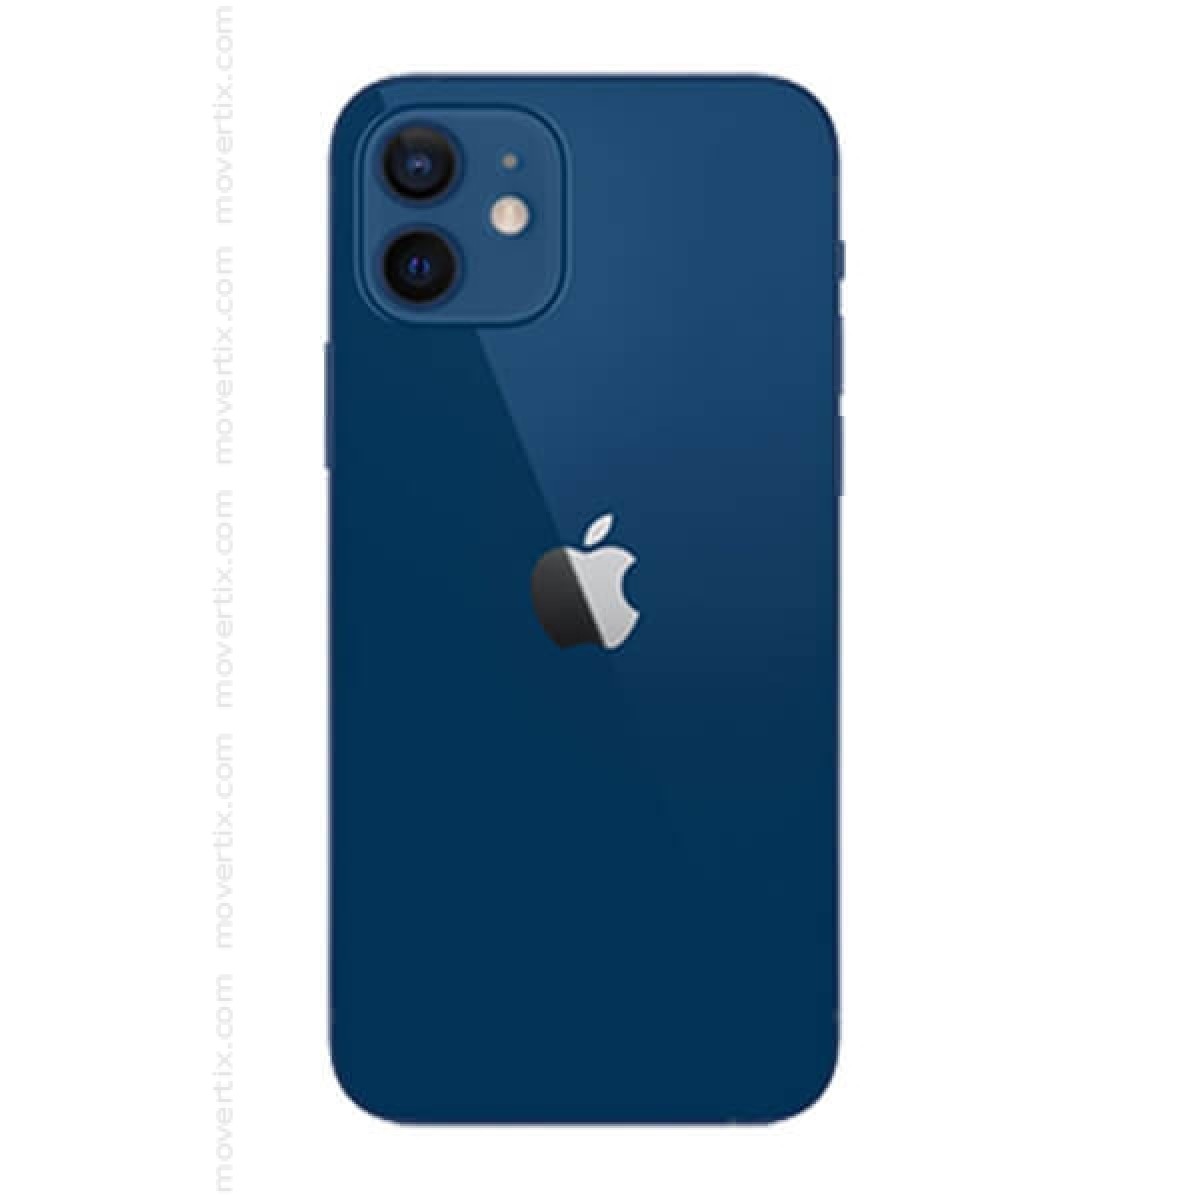 iPhone12 128G BLUE